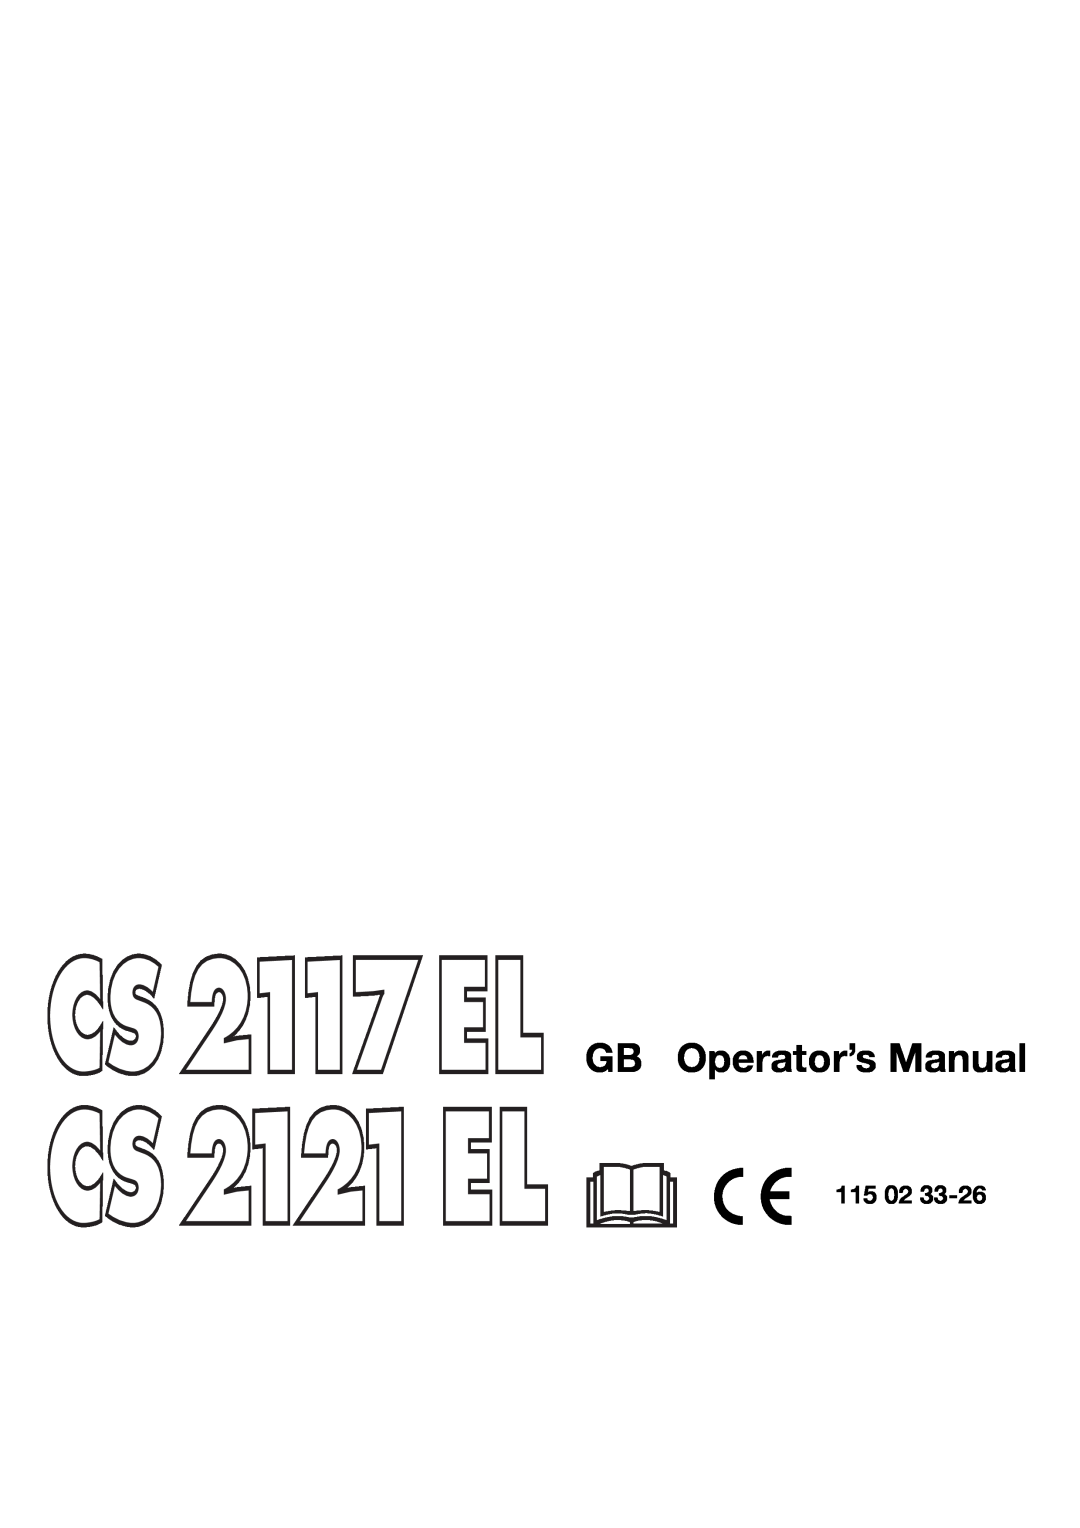 Jonsered CS 2117 EL, CS 2121 EL manual 115, GB Operator’s Manual 